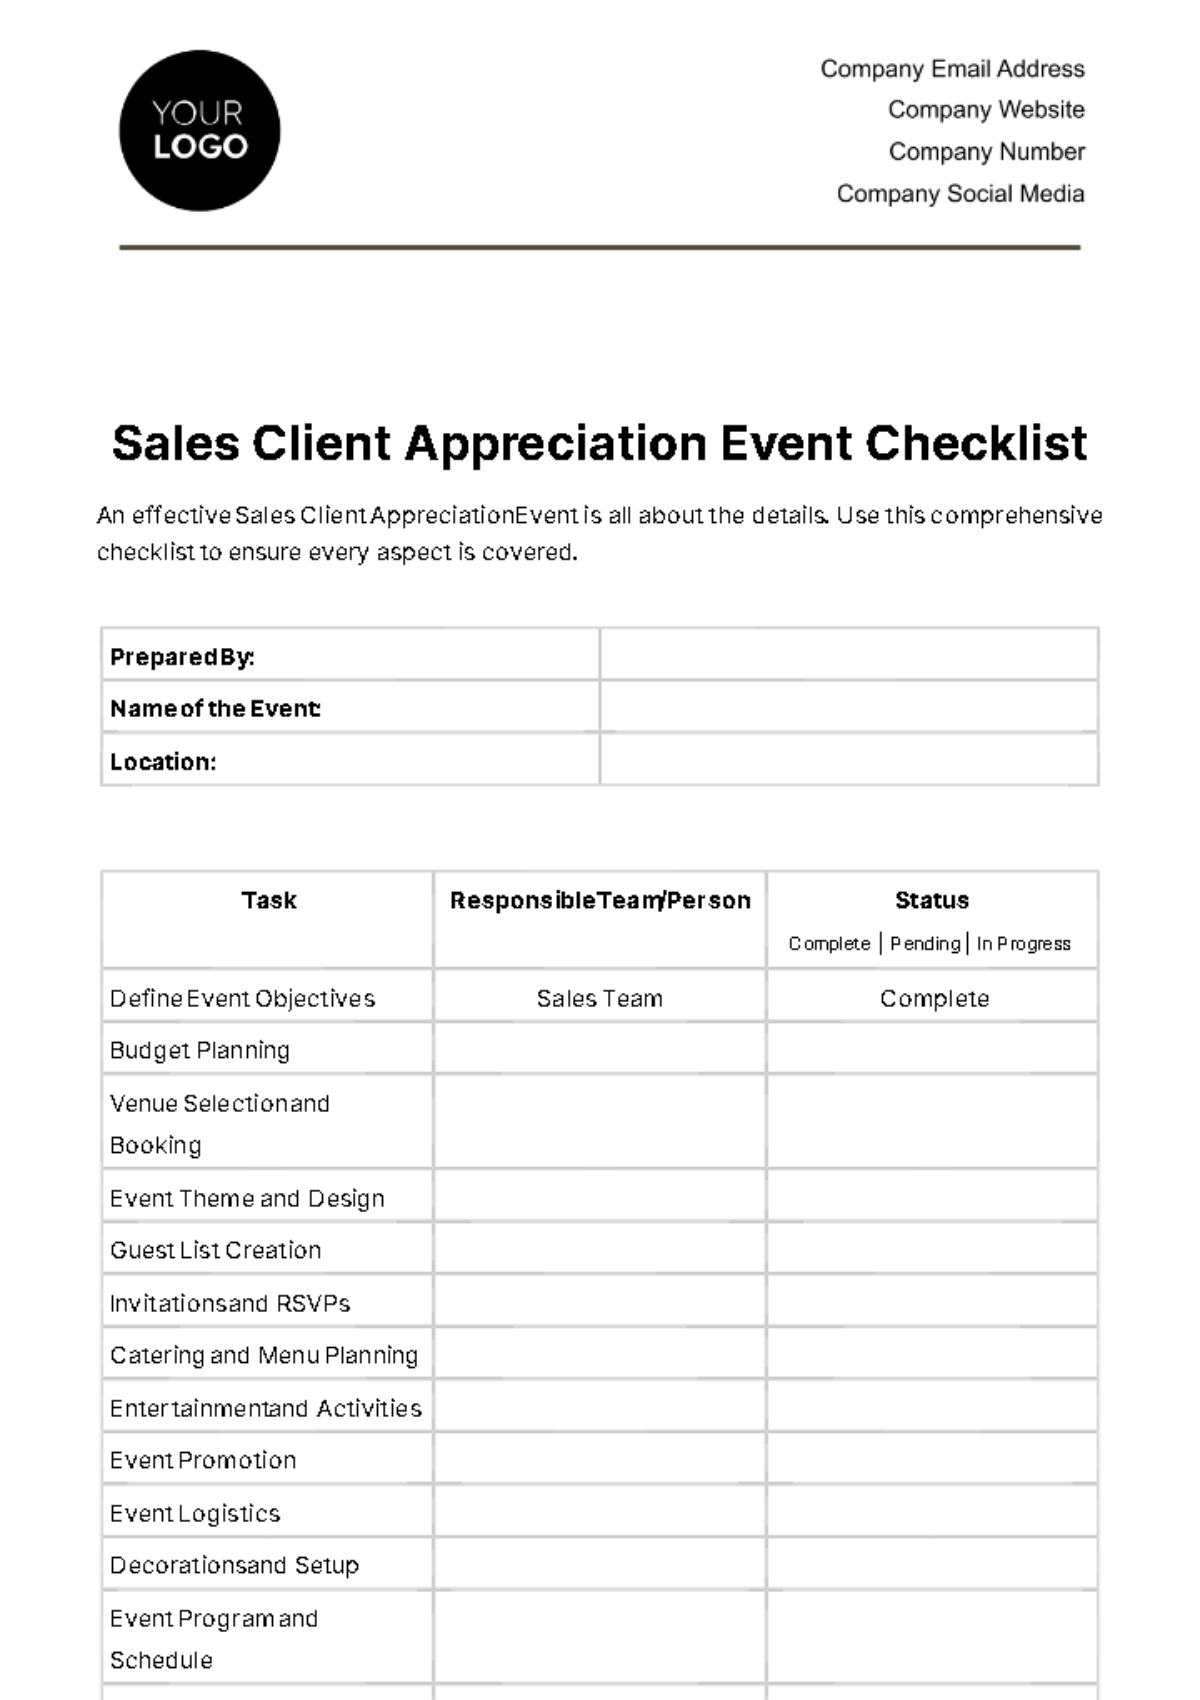 Sales Client Appreciation Event Checklist Template